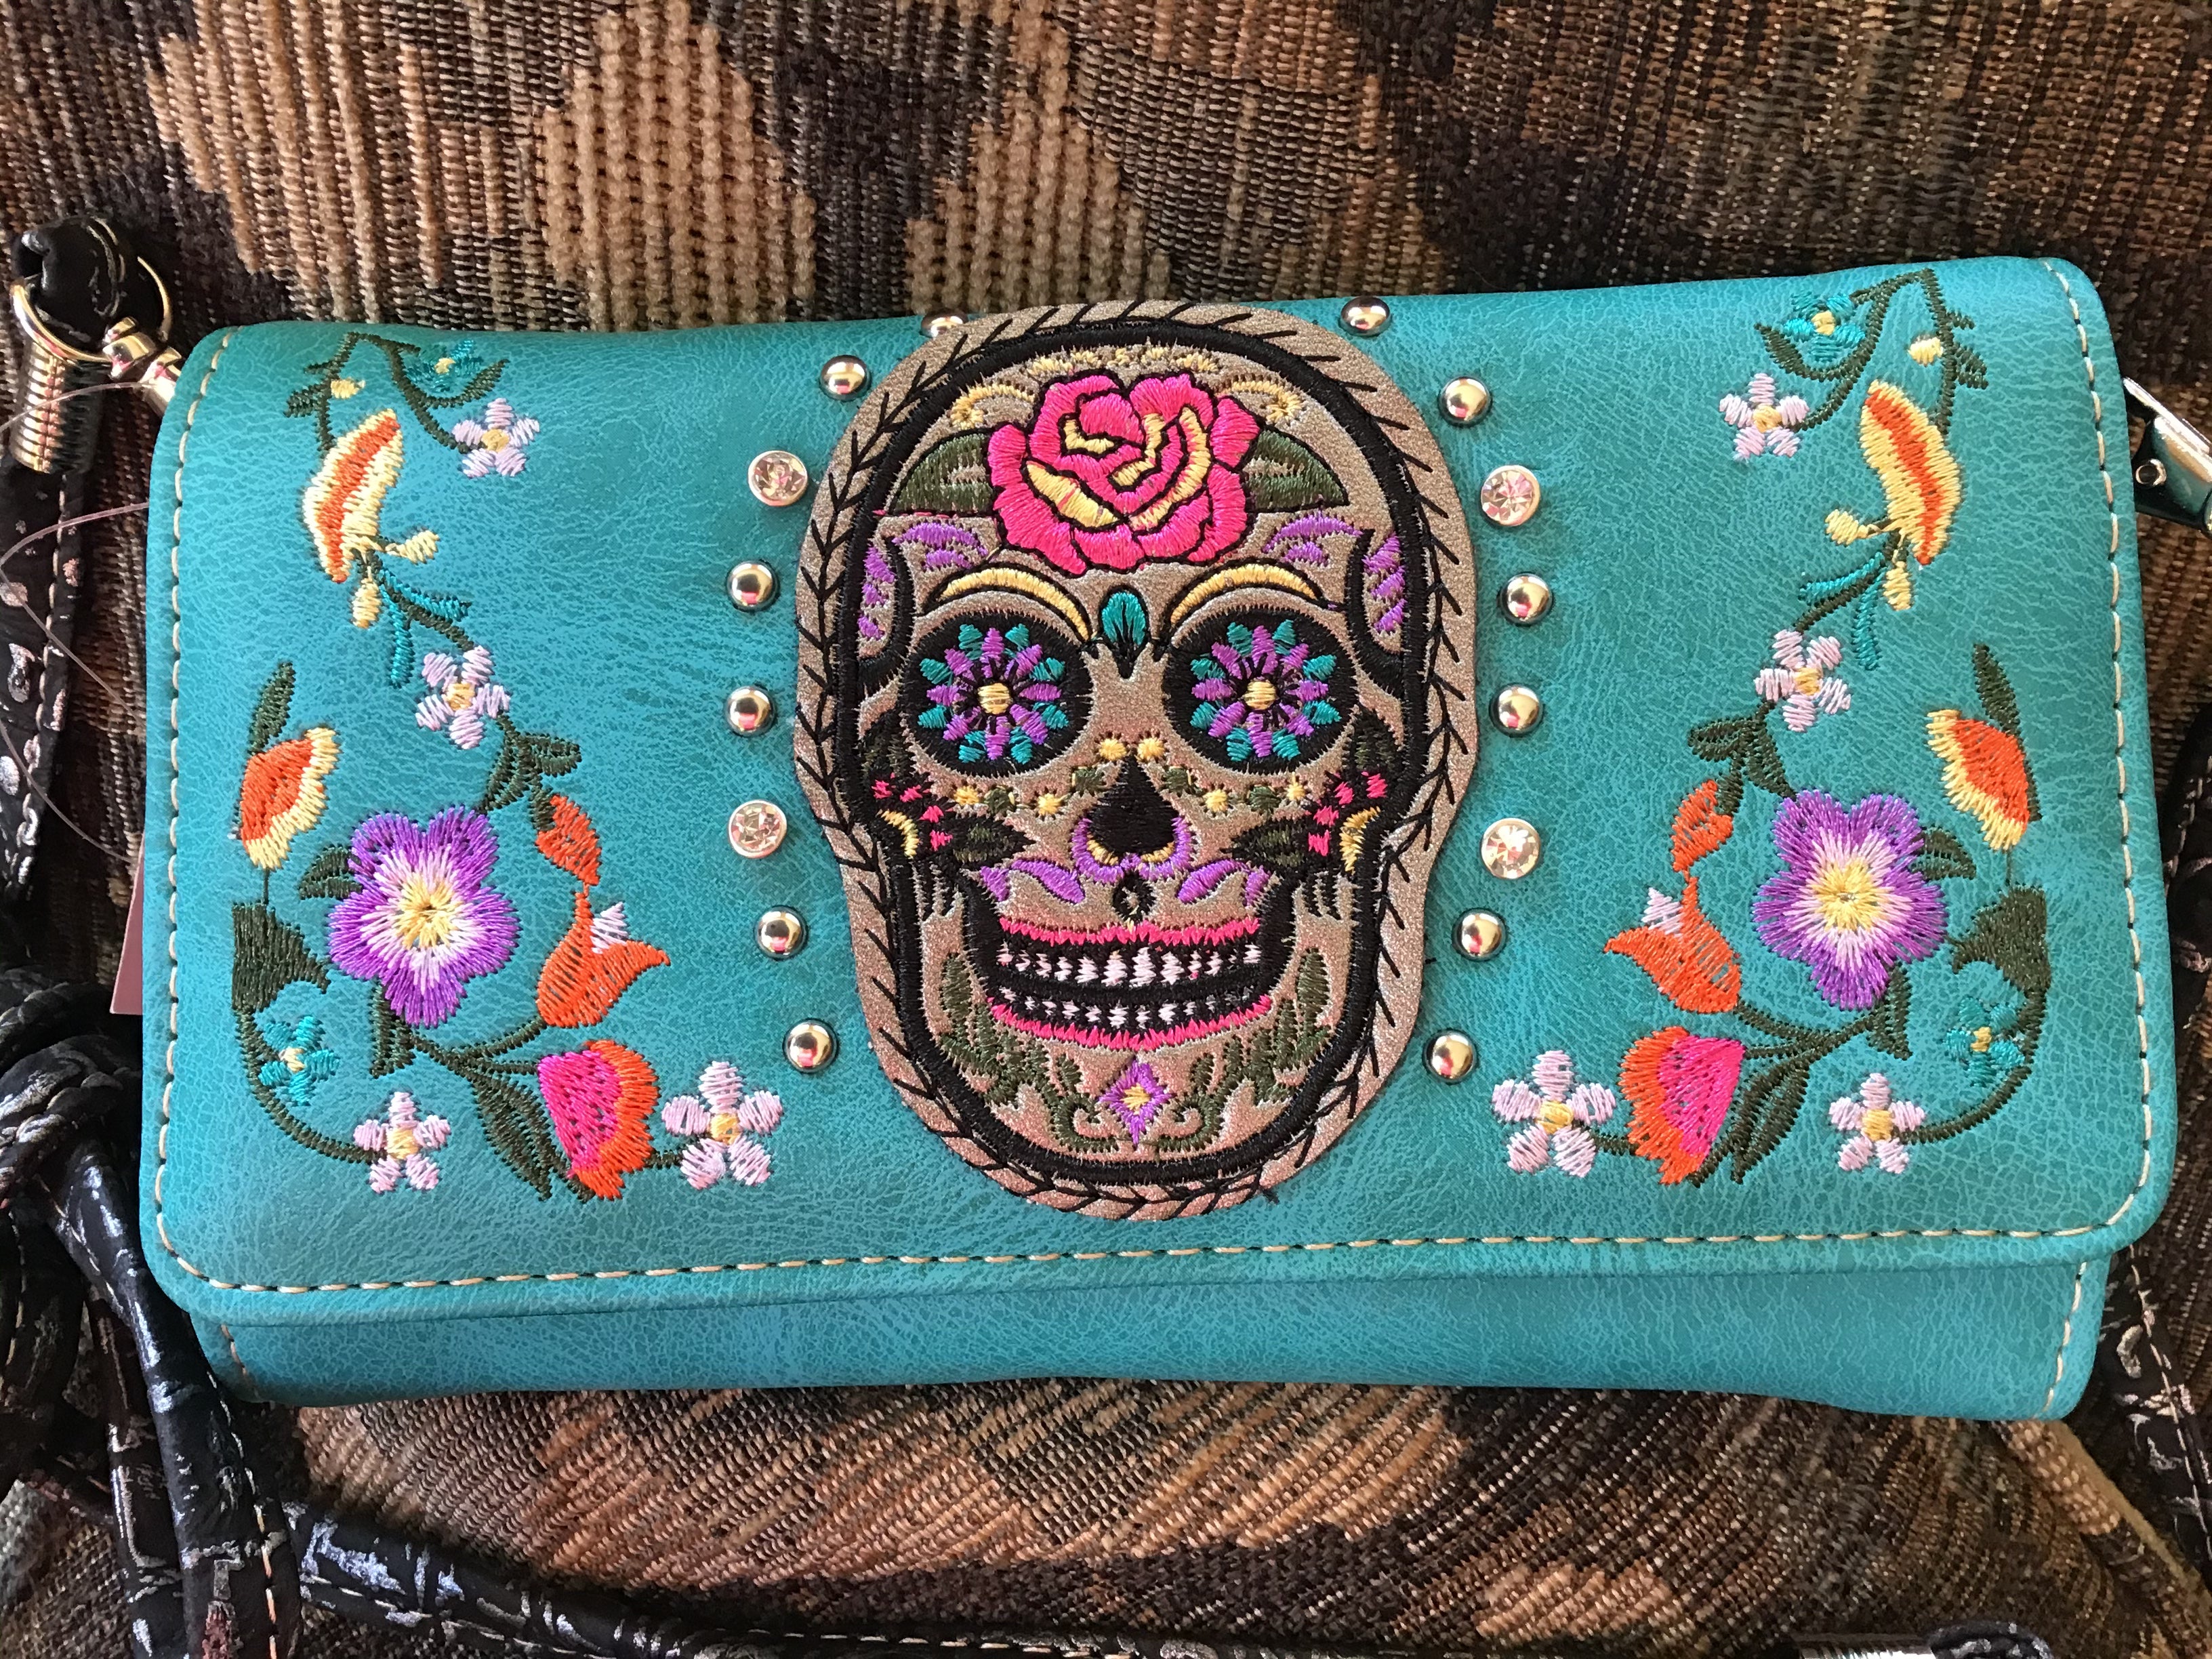 Western Sugar Skull Trifold Clutch Cross body Wallet-Turquoise , Black, Purple & Hot Pink